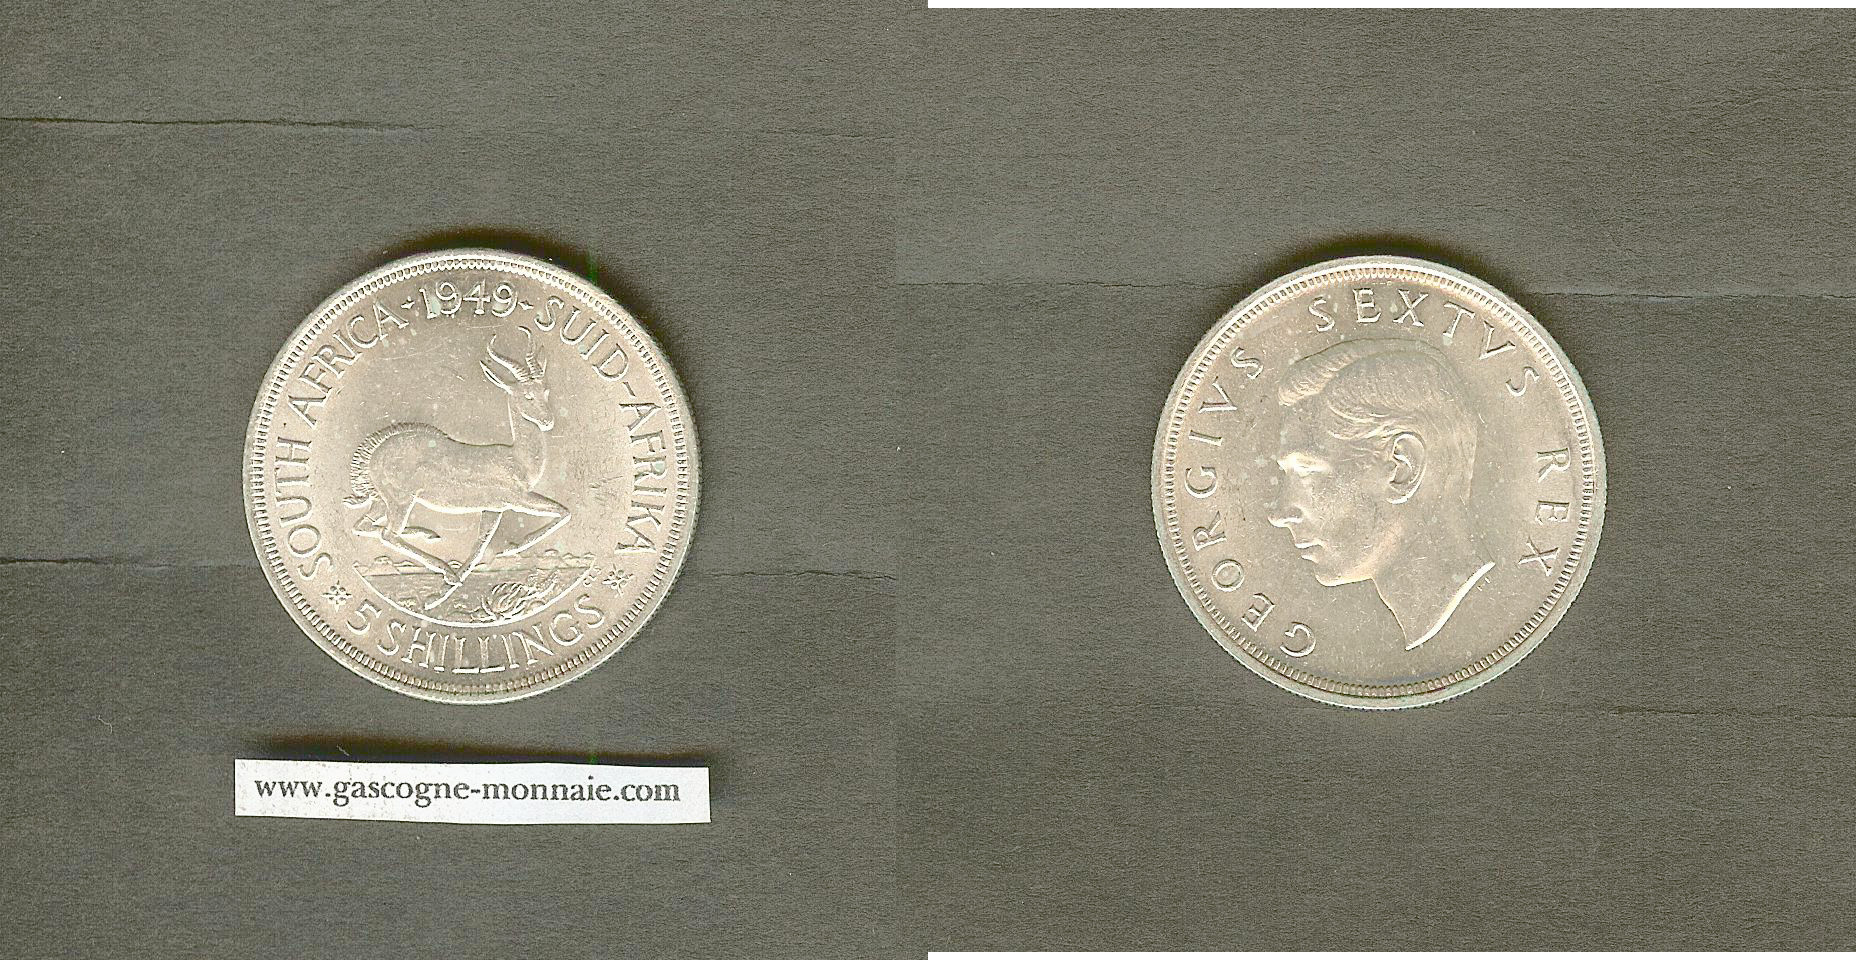 South Africa 5 shillings 1949 BU